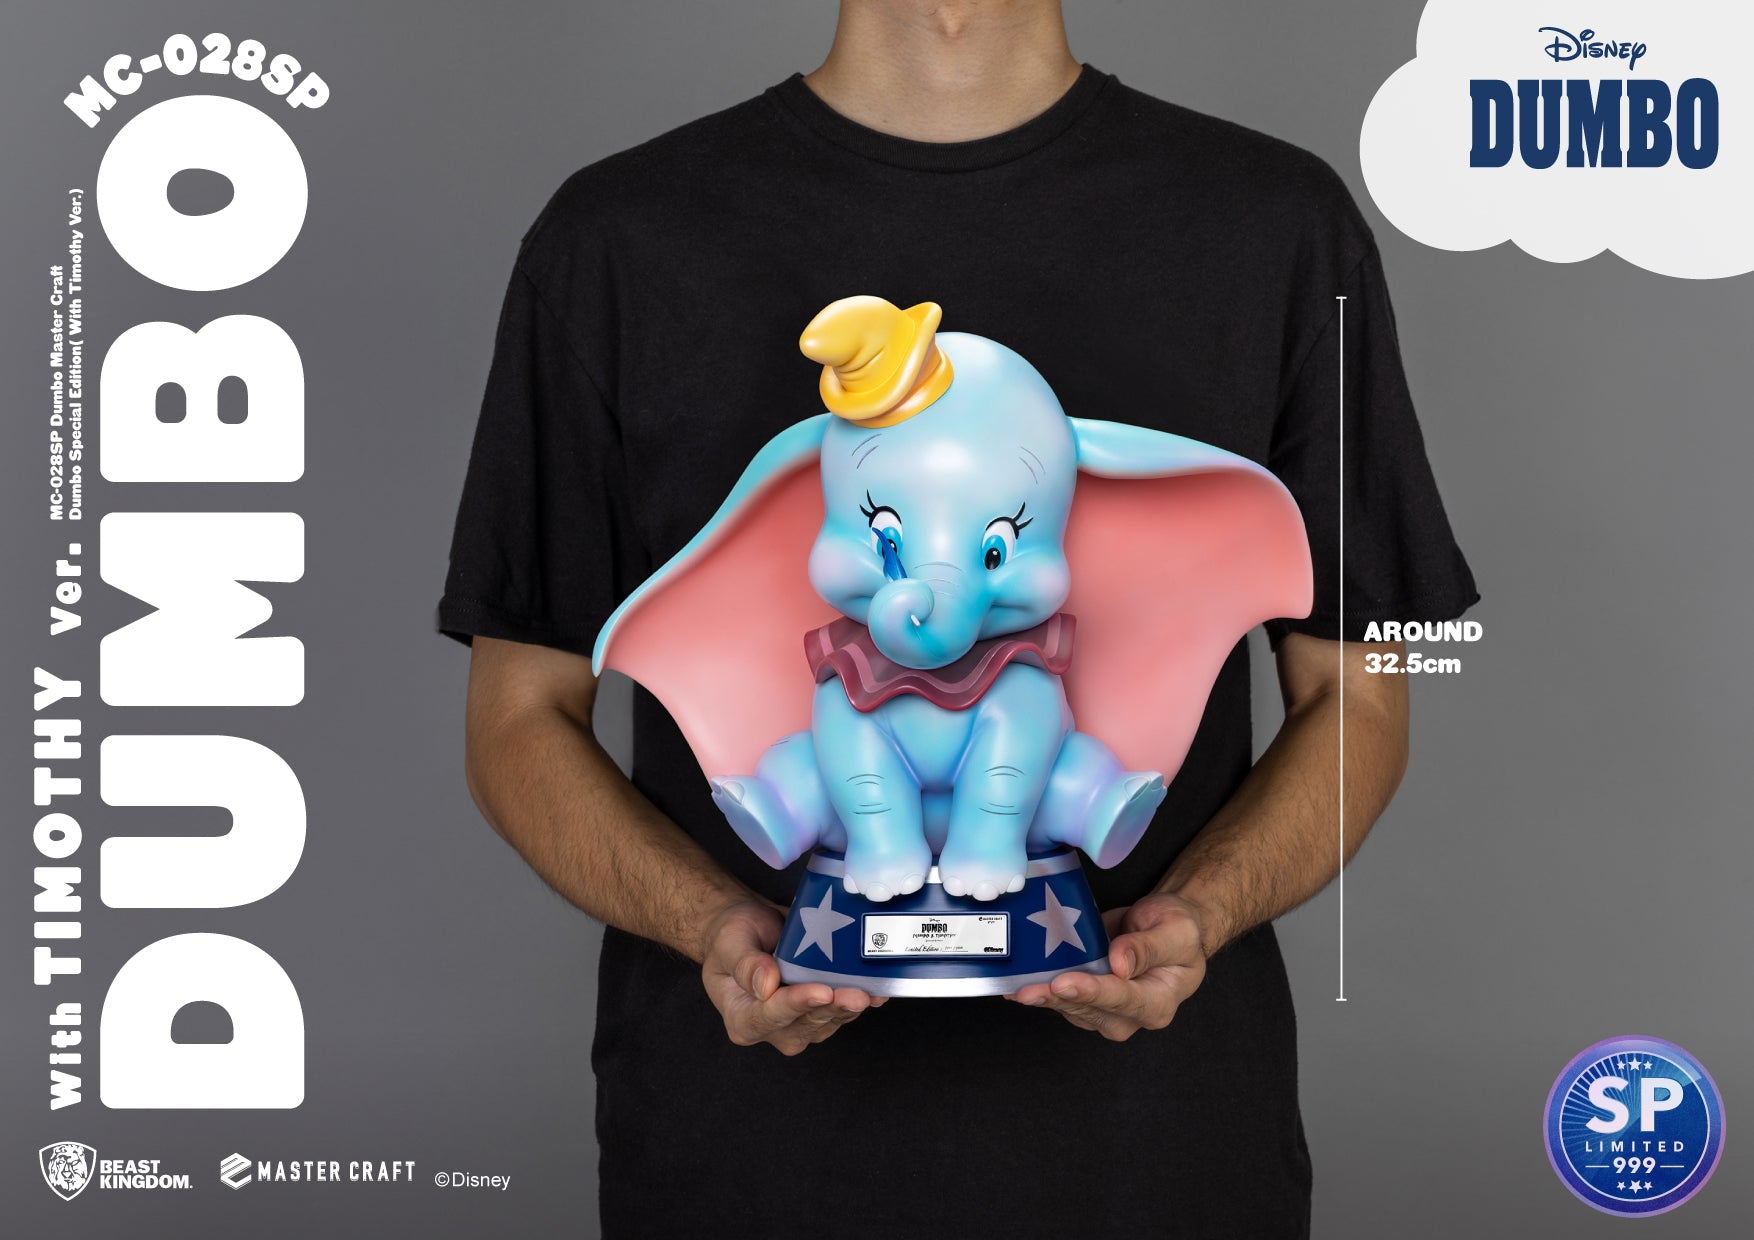 Beast Kingdom MC-028SP Dumbo Master Craft Dumbo Special Edition( With –  Beast Kingdom SEA